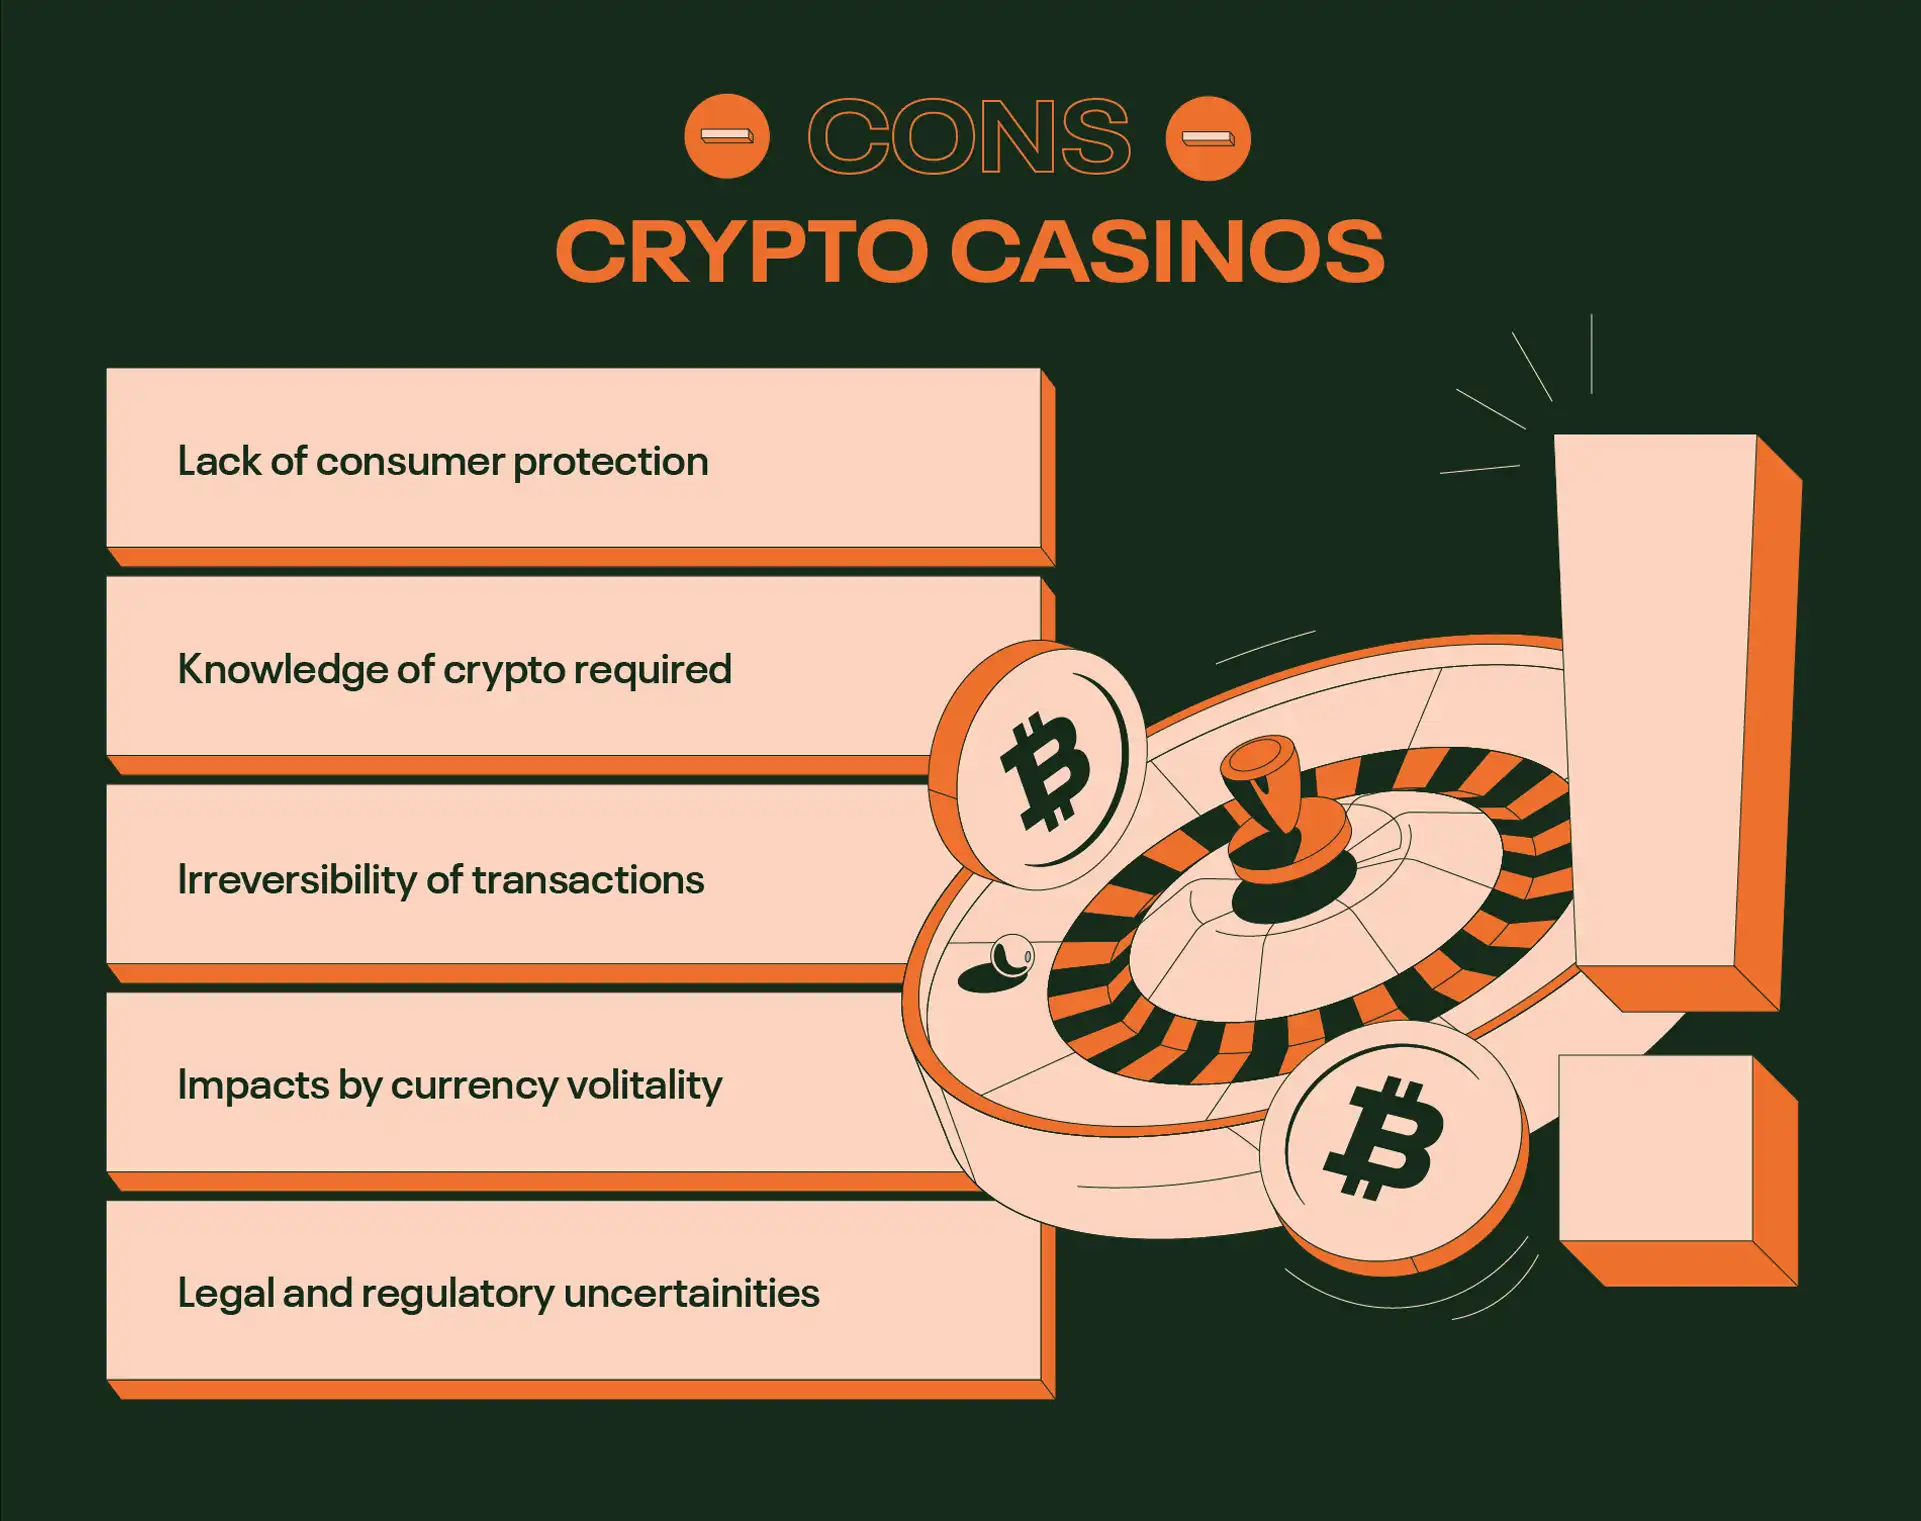 Cons of crypto casinos